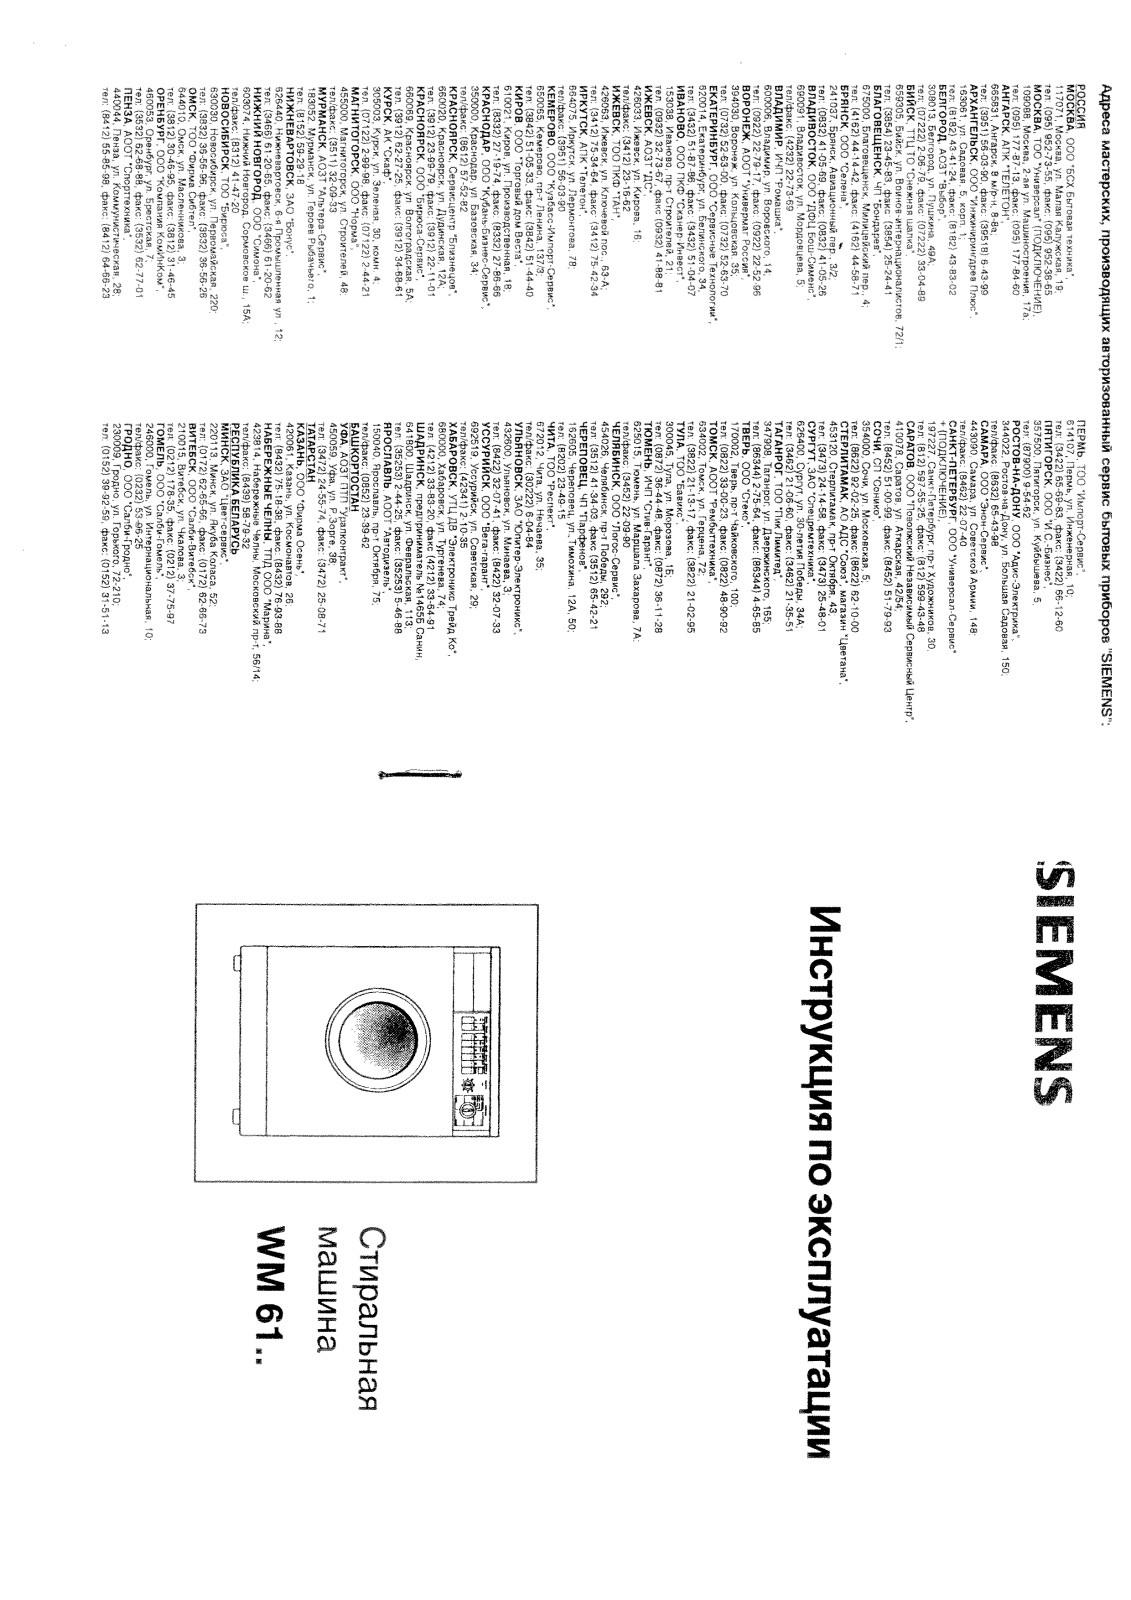 Siemens WM61001 User Manual